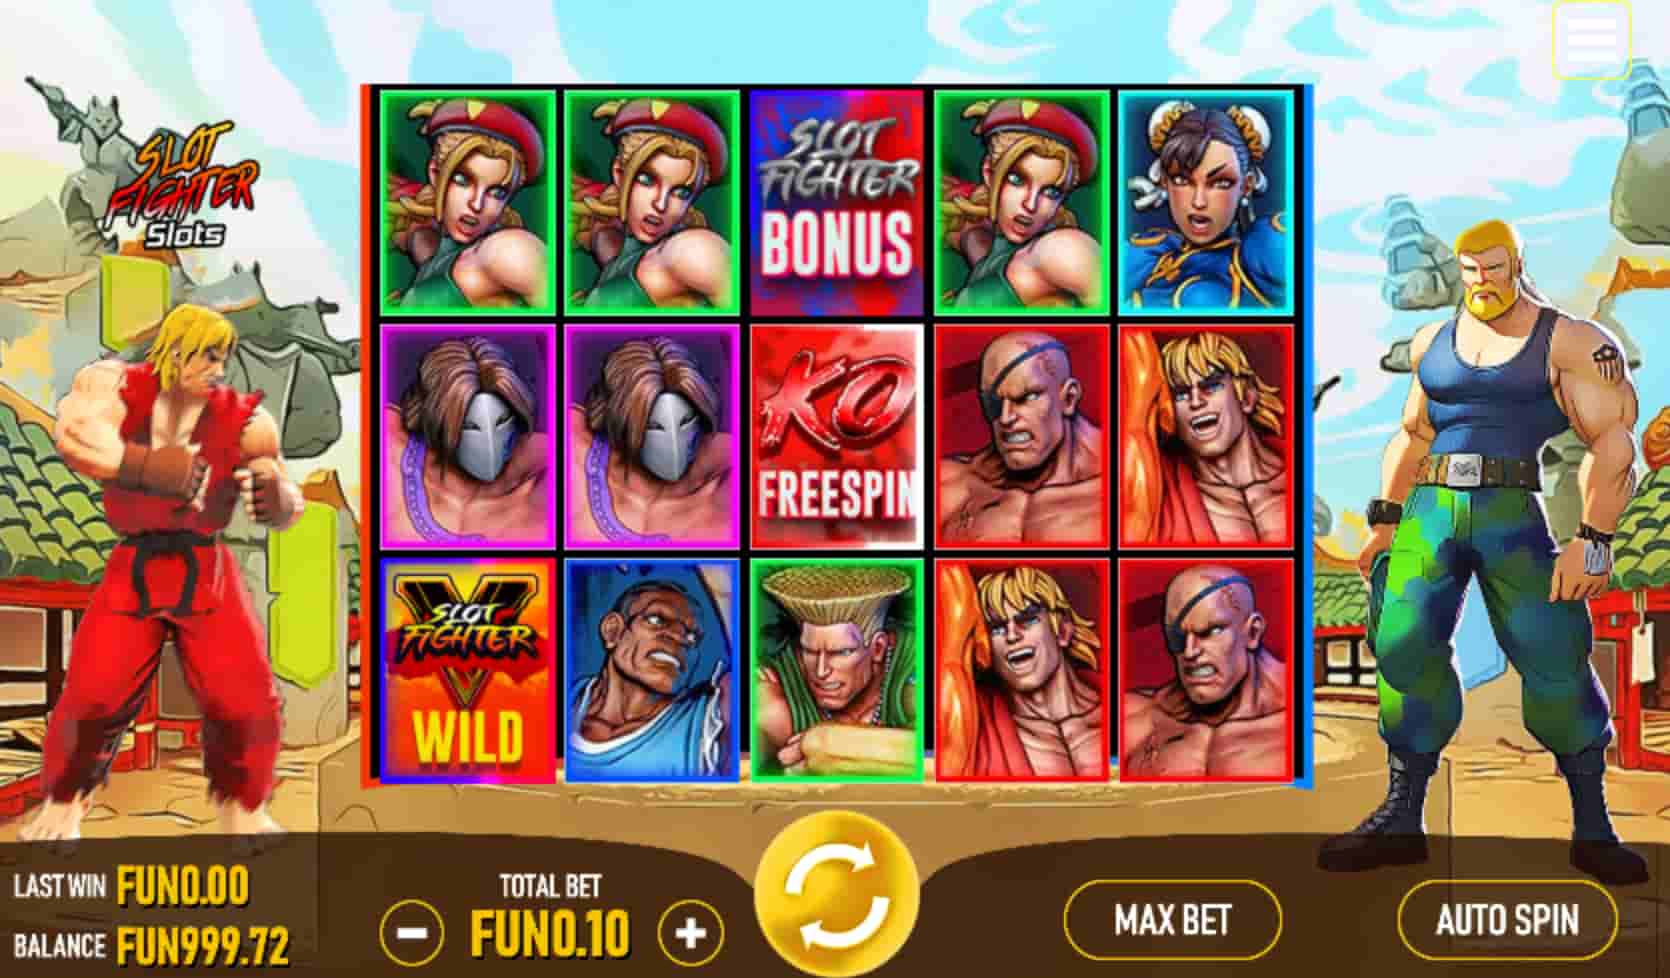 Slot Fighter screenshot 2